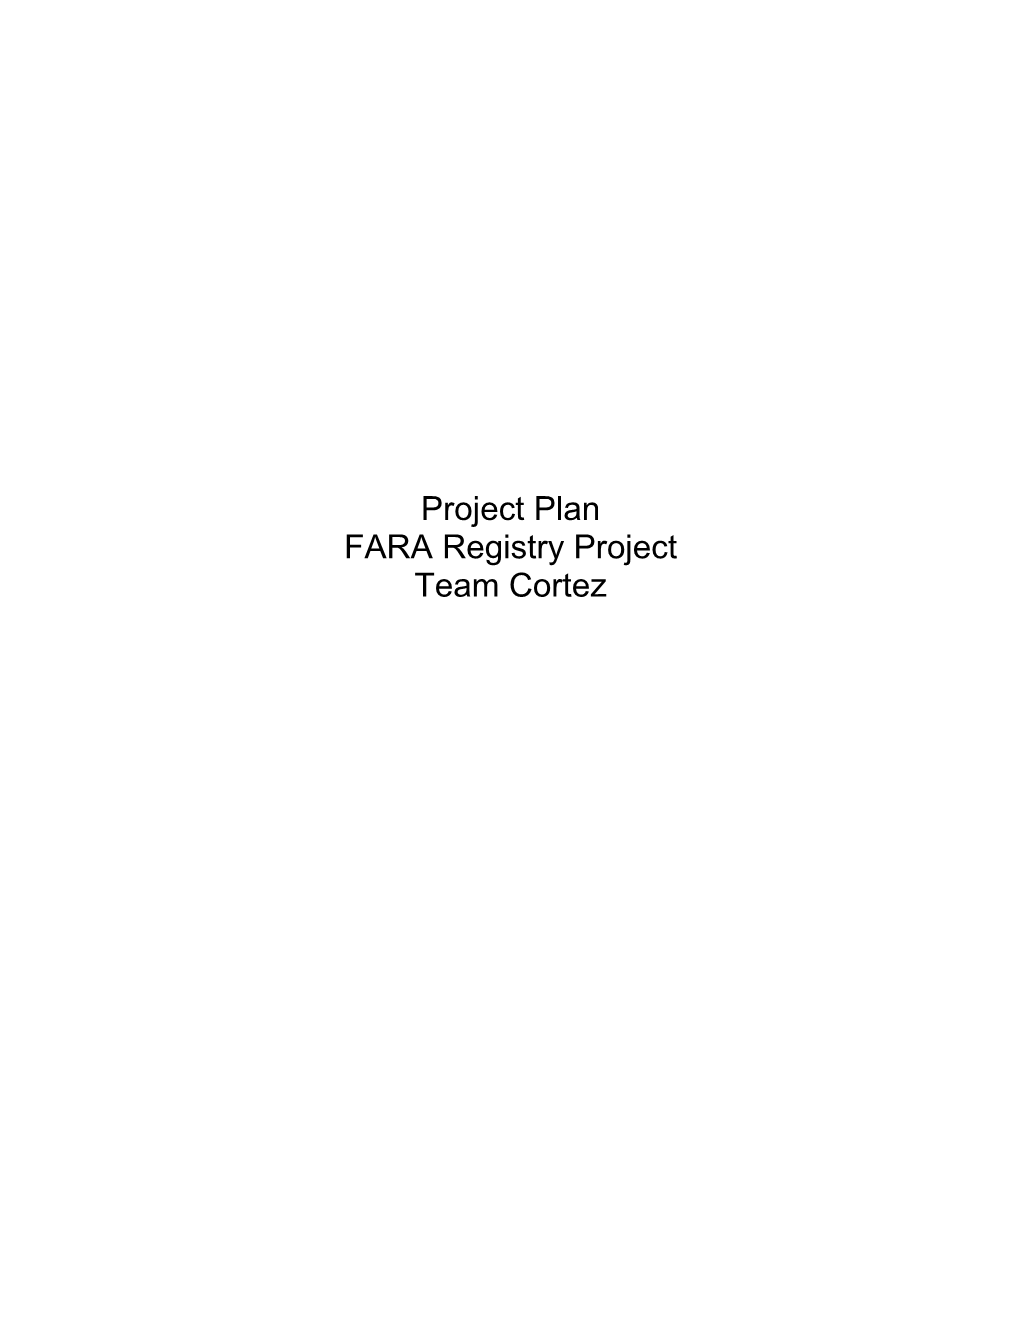 FARA Registry Project